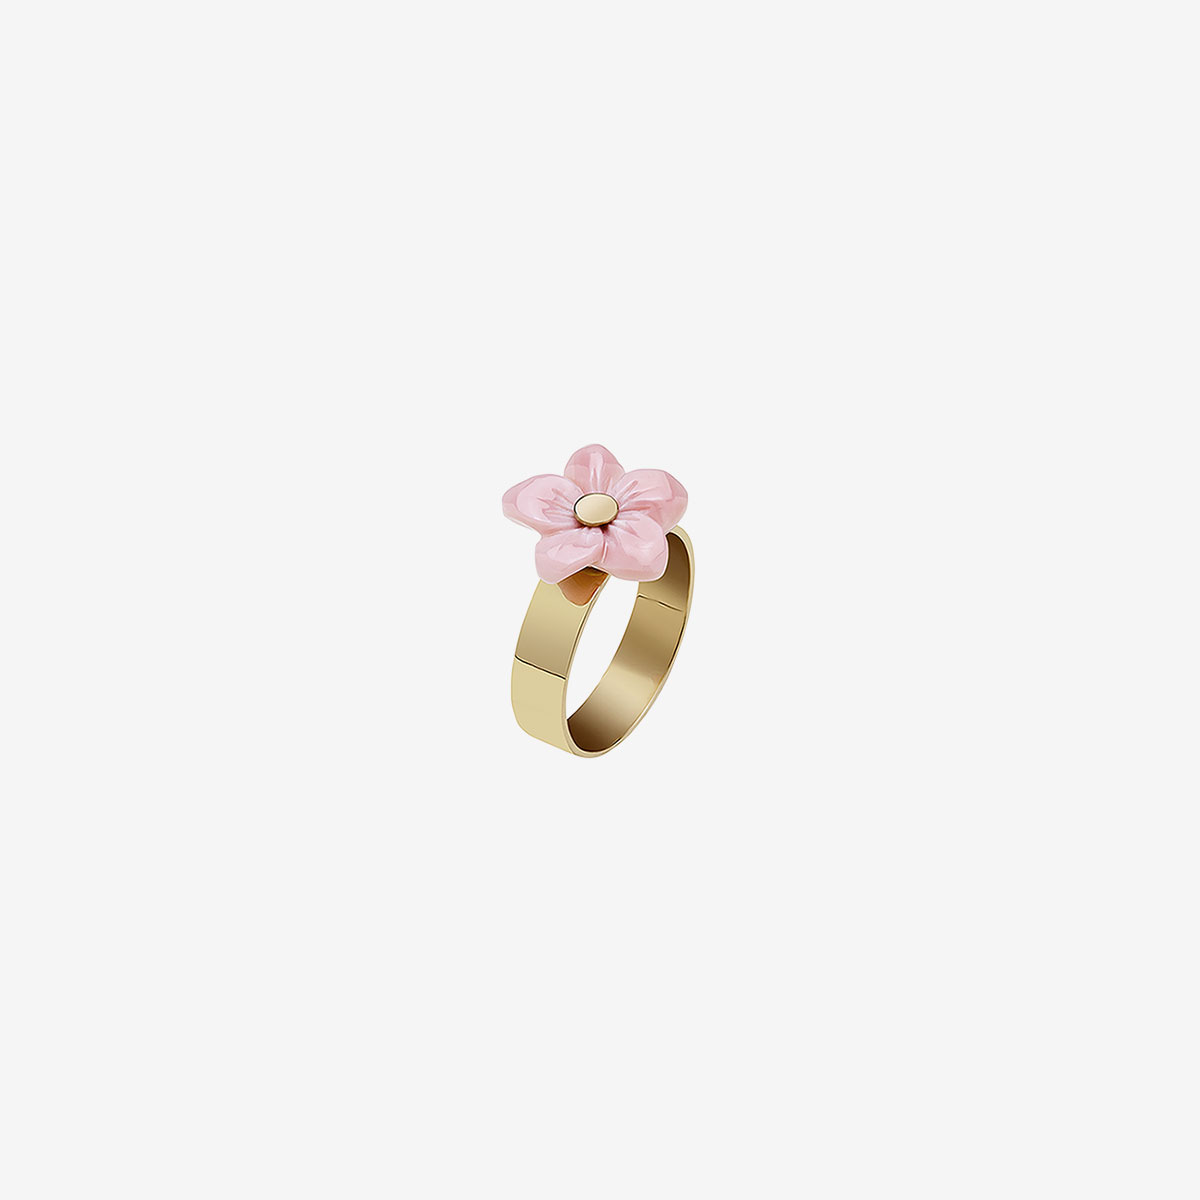 anillo artesanal Enai de oro de 9k o 18k y concha rosa diseñado por Belen Bajo